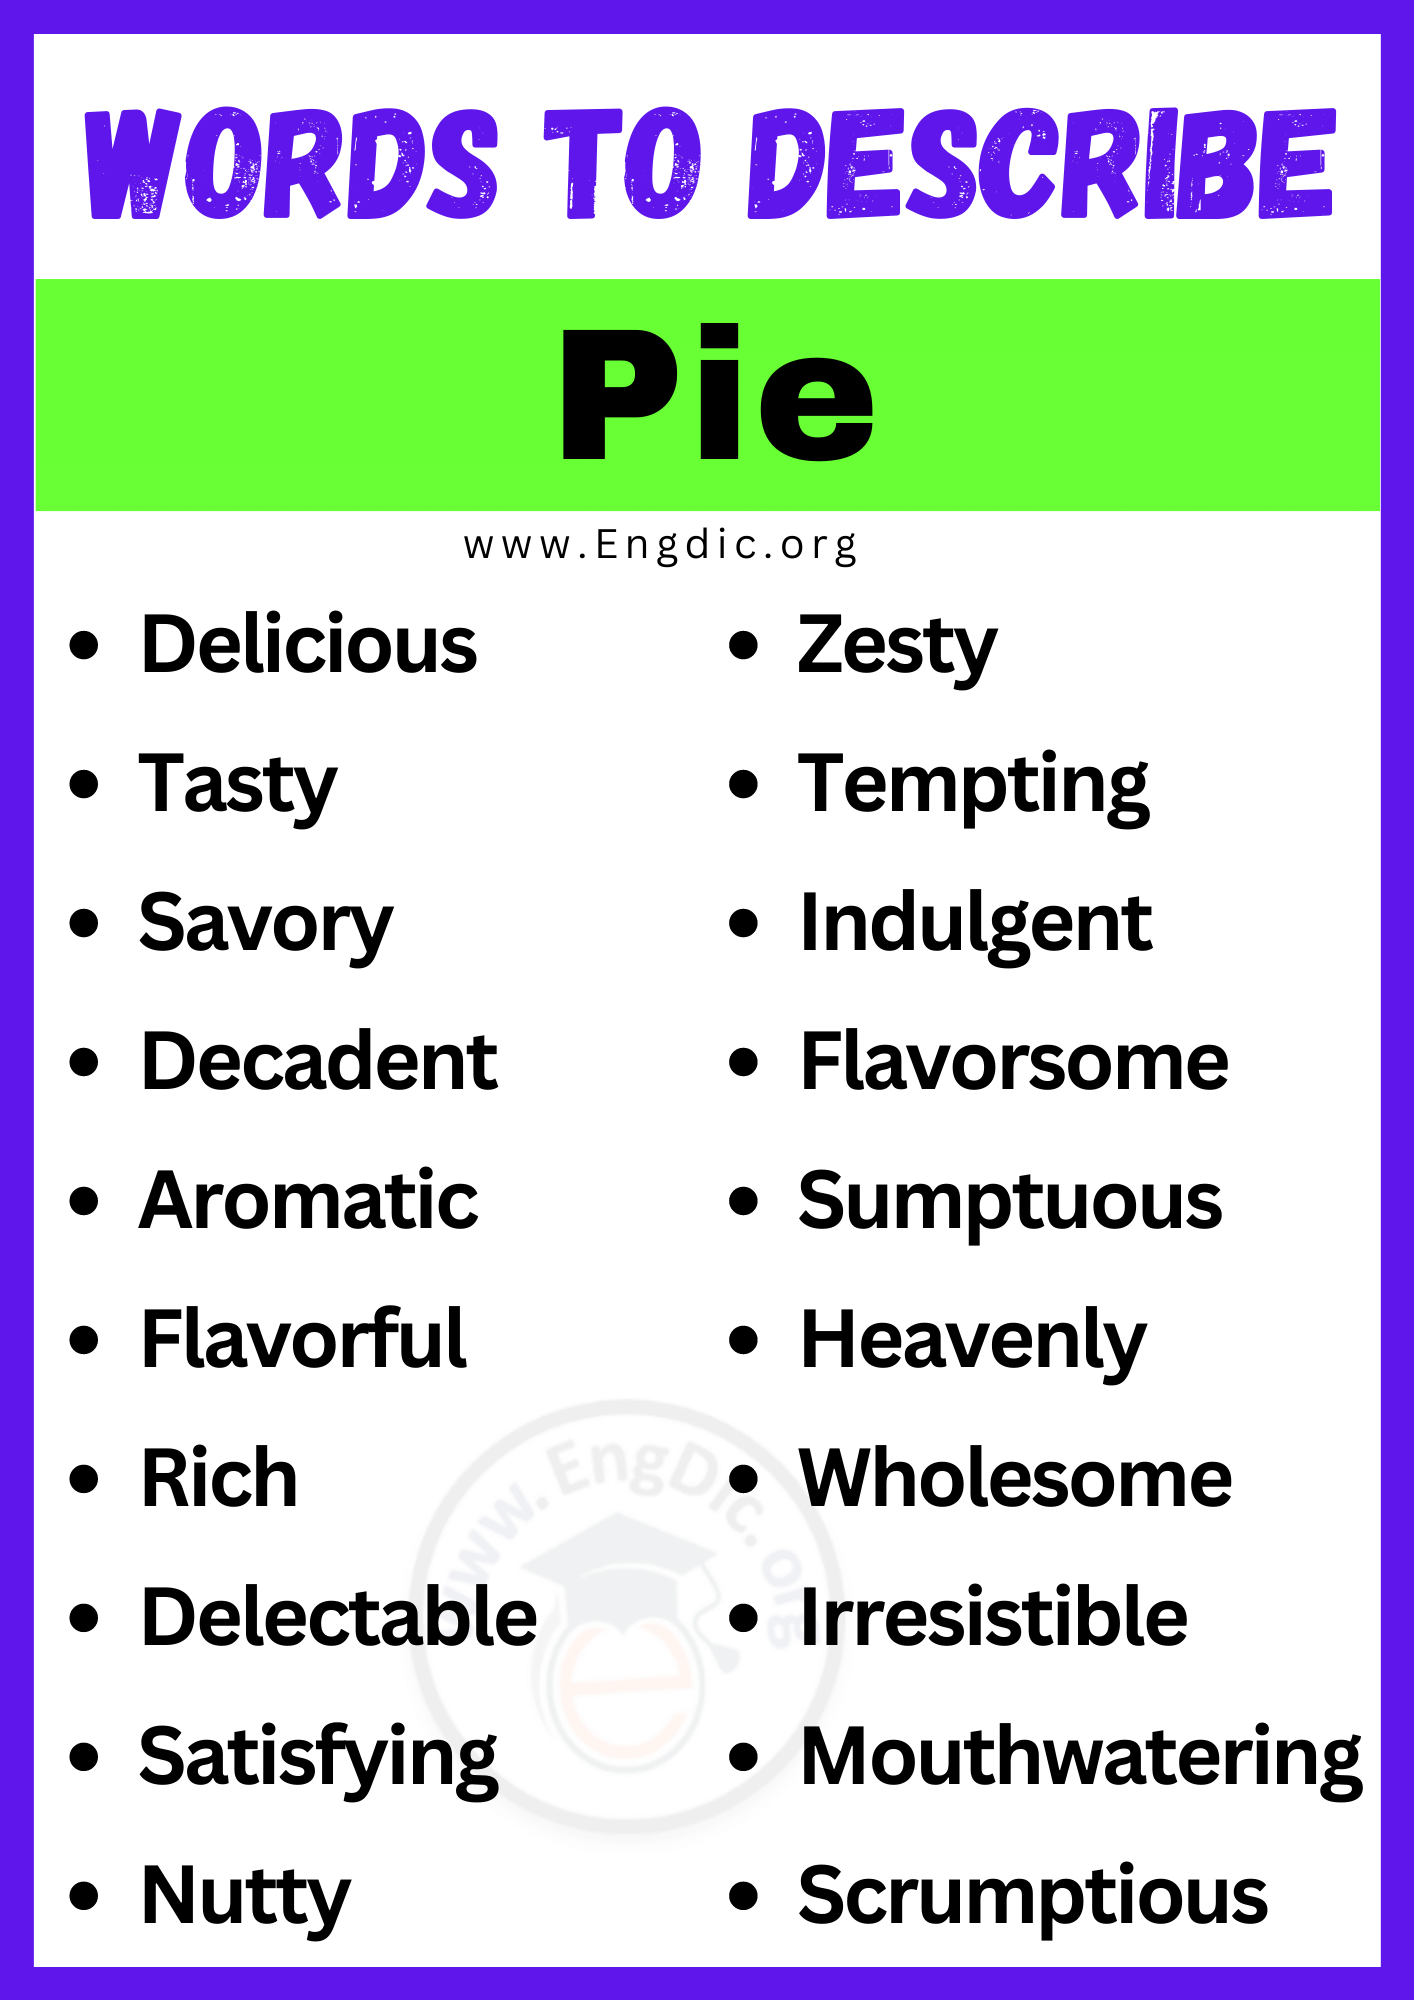 Words to Describe Pie